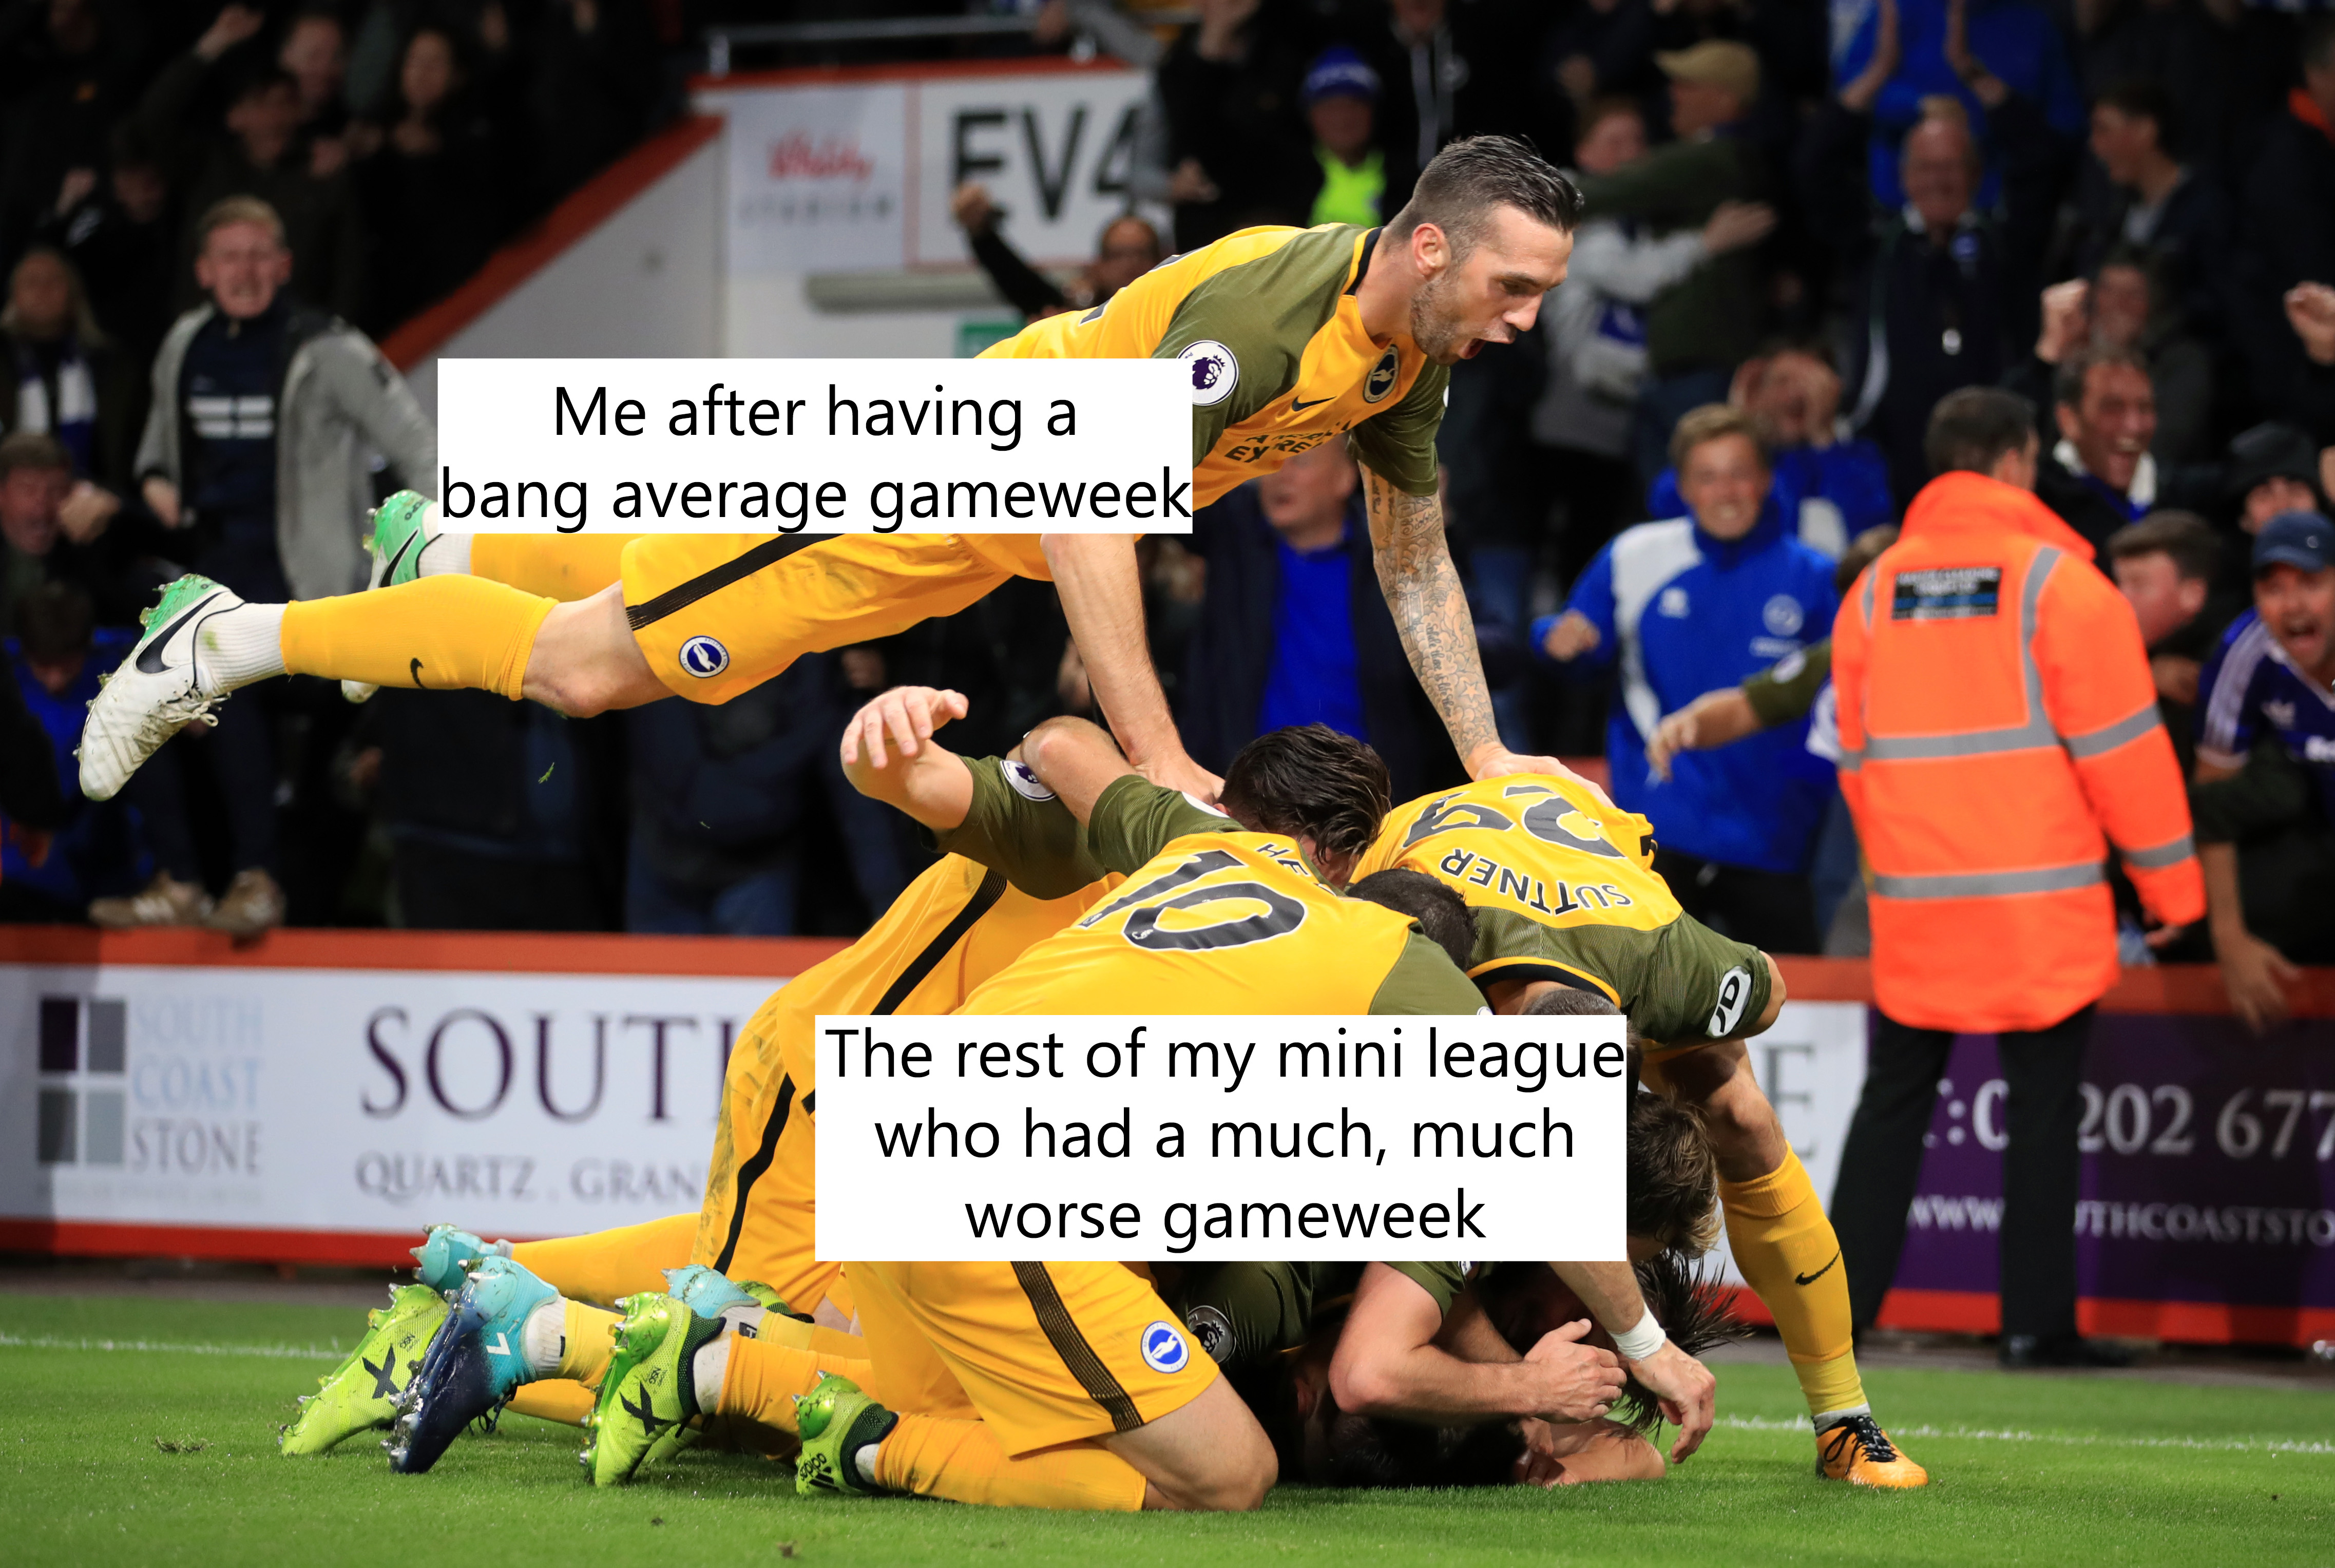 the league fantasy football memes